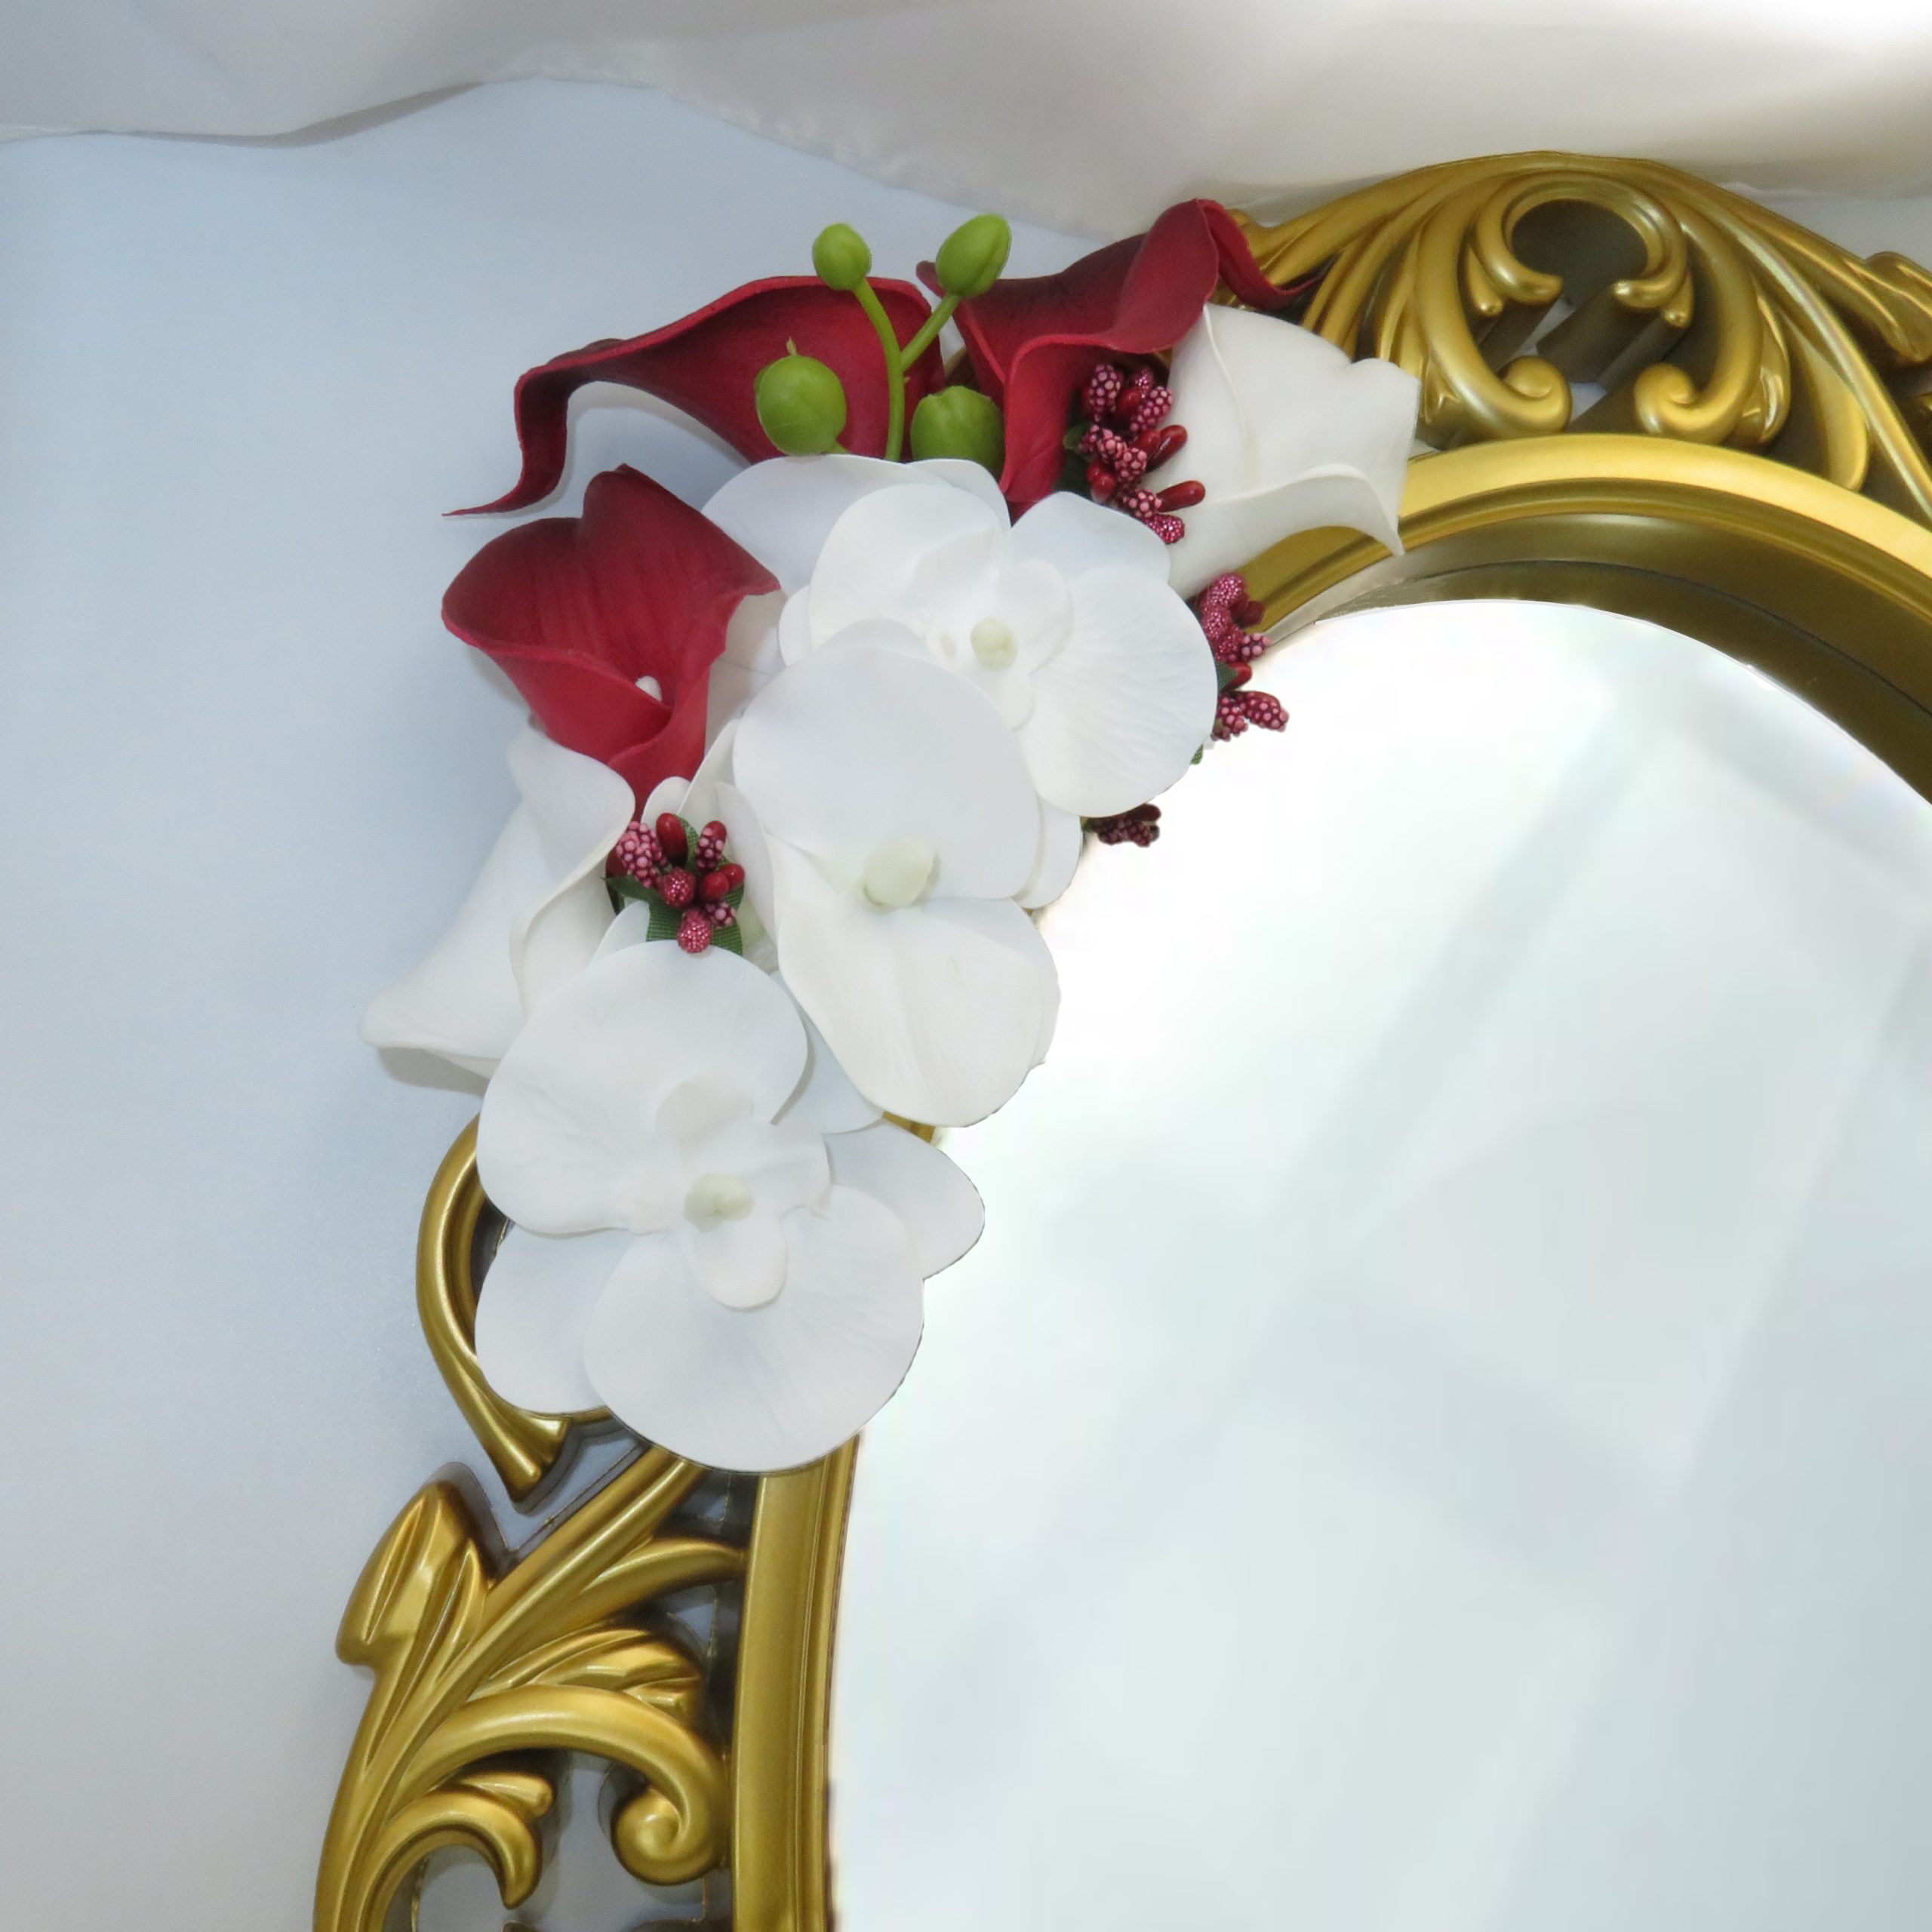 Oglinda miresei, forma ovala in stil victorian, lucrata cu flori de matase, model auriu – ILIF309018